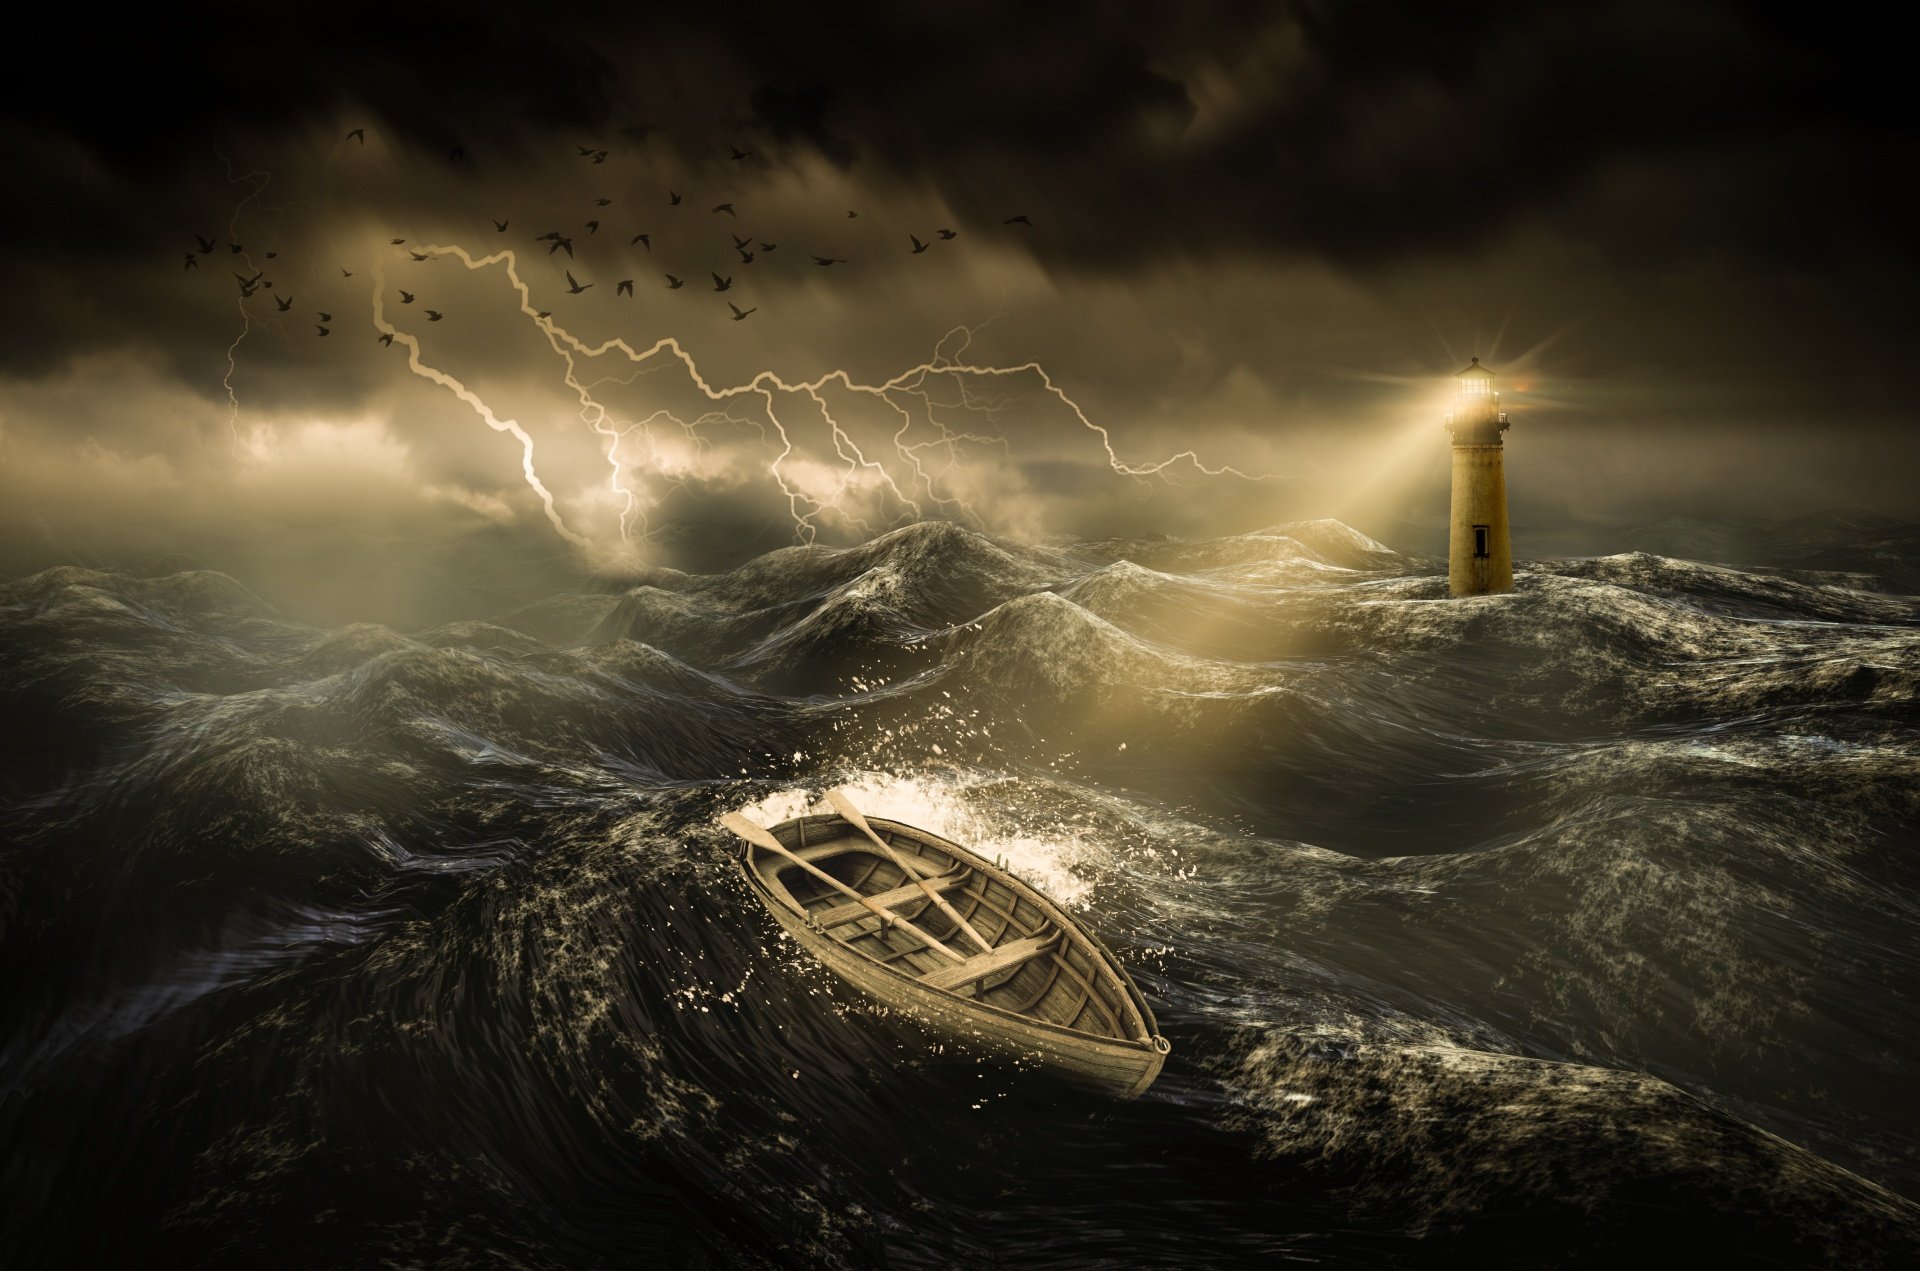 Семей шторм. Квест старый Маяк Саратов. Маяк лодка в шторм. Море шторм. Корабль в шторм.